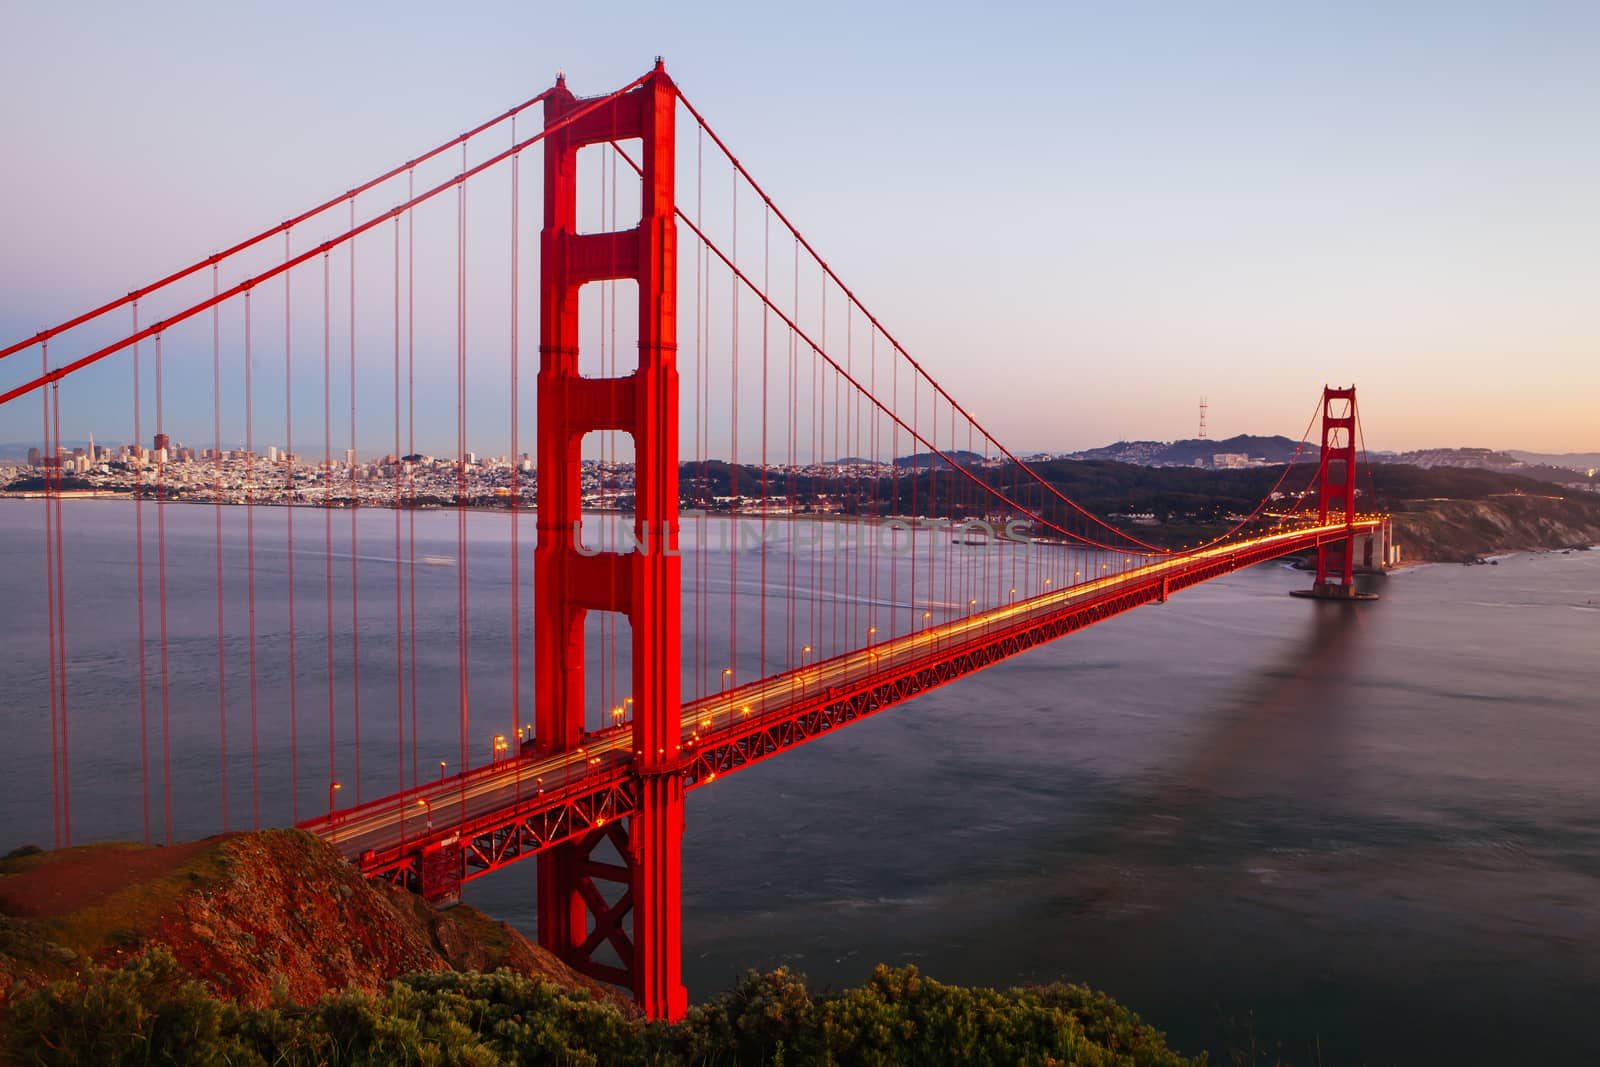 A view at dusk thru the Golden Gate Bridge towards downtown San Francisco. In California, USA.